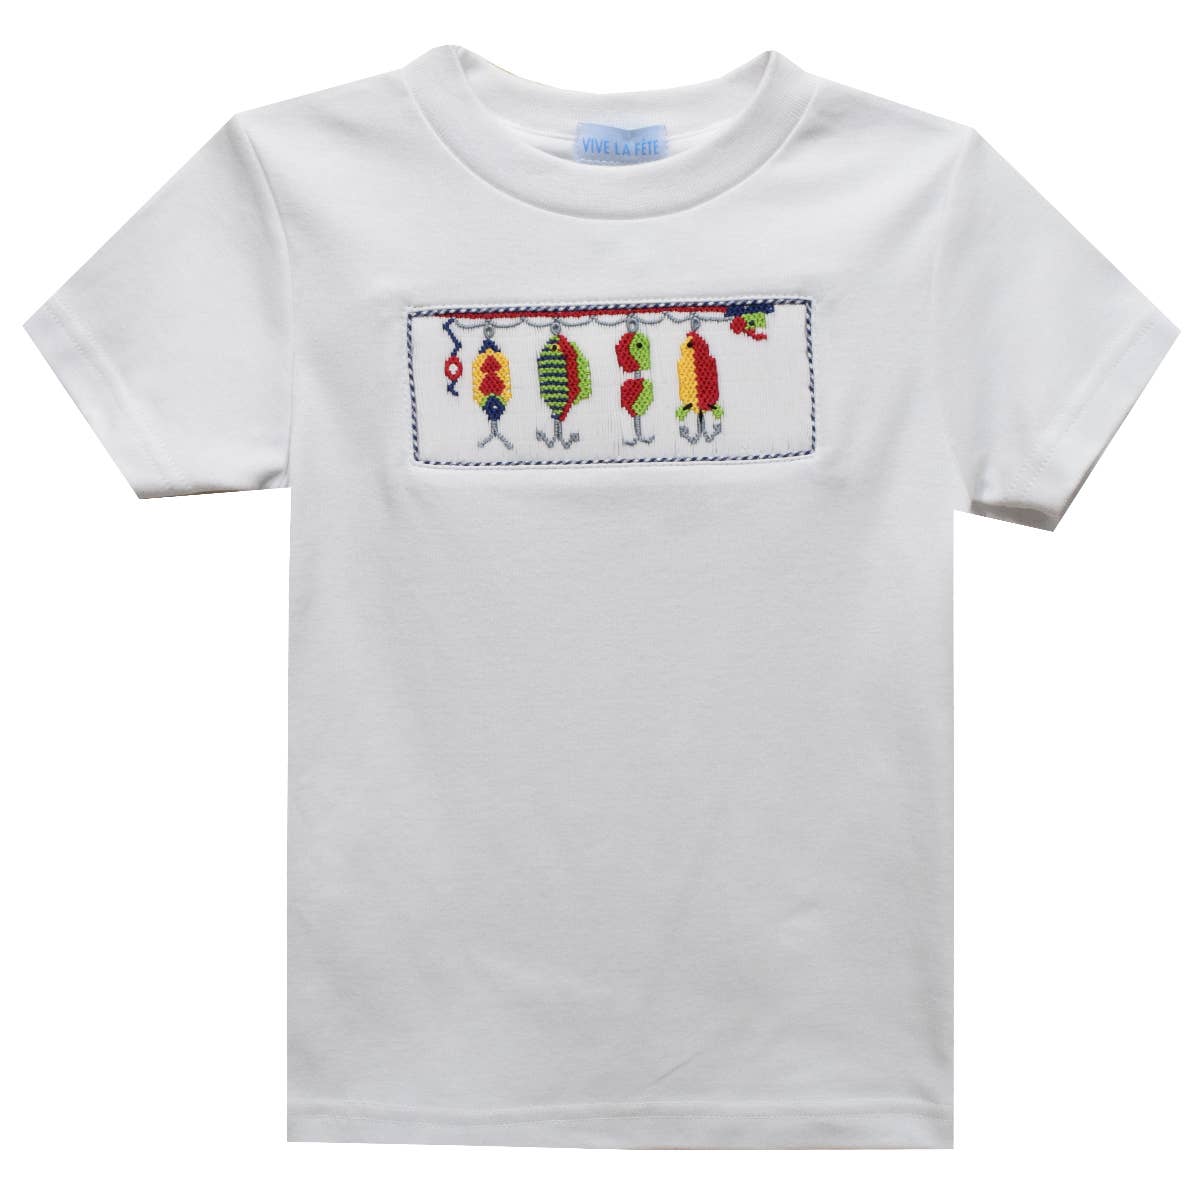 Vive La Fete - Lures Smocked Knit Short Sleeve Boys T-Shirt